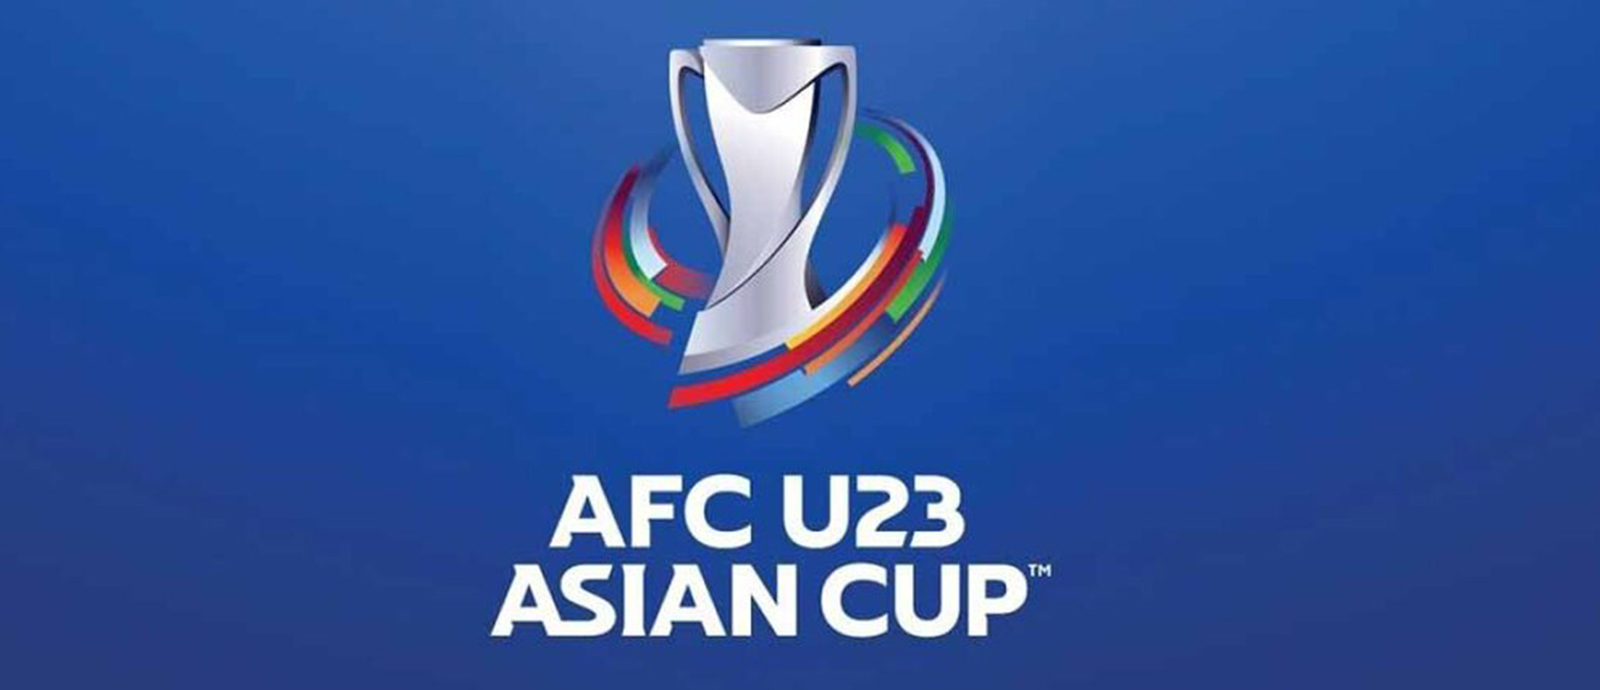  AFC U23 ASIAN CUP